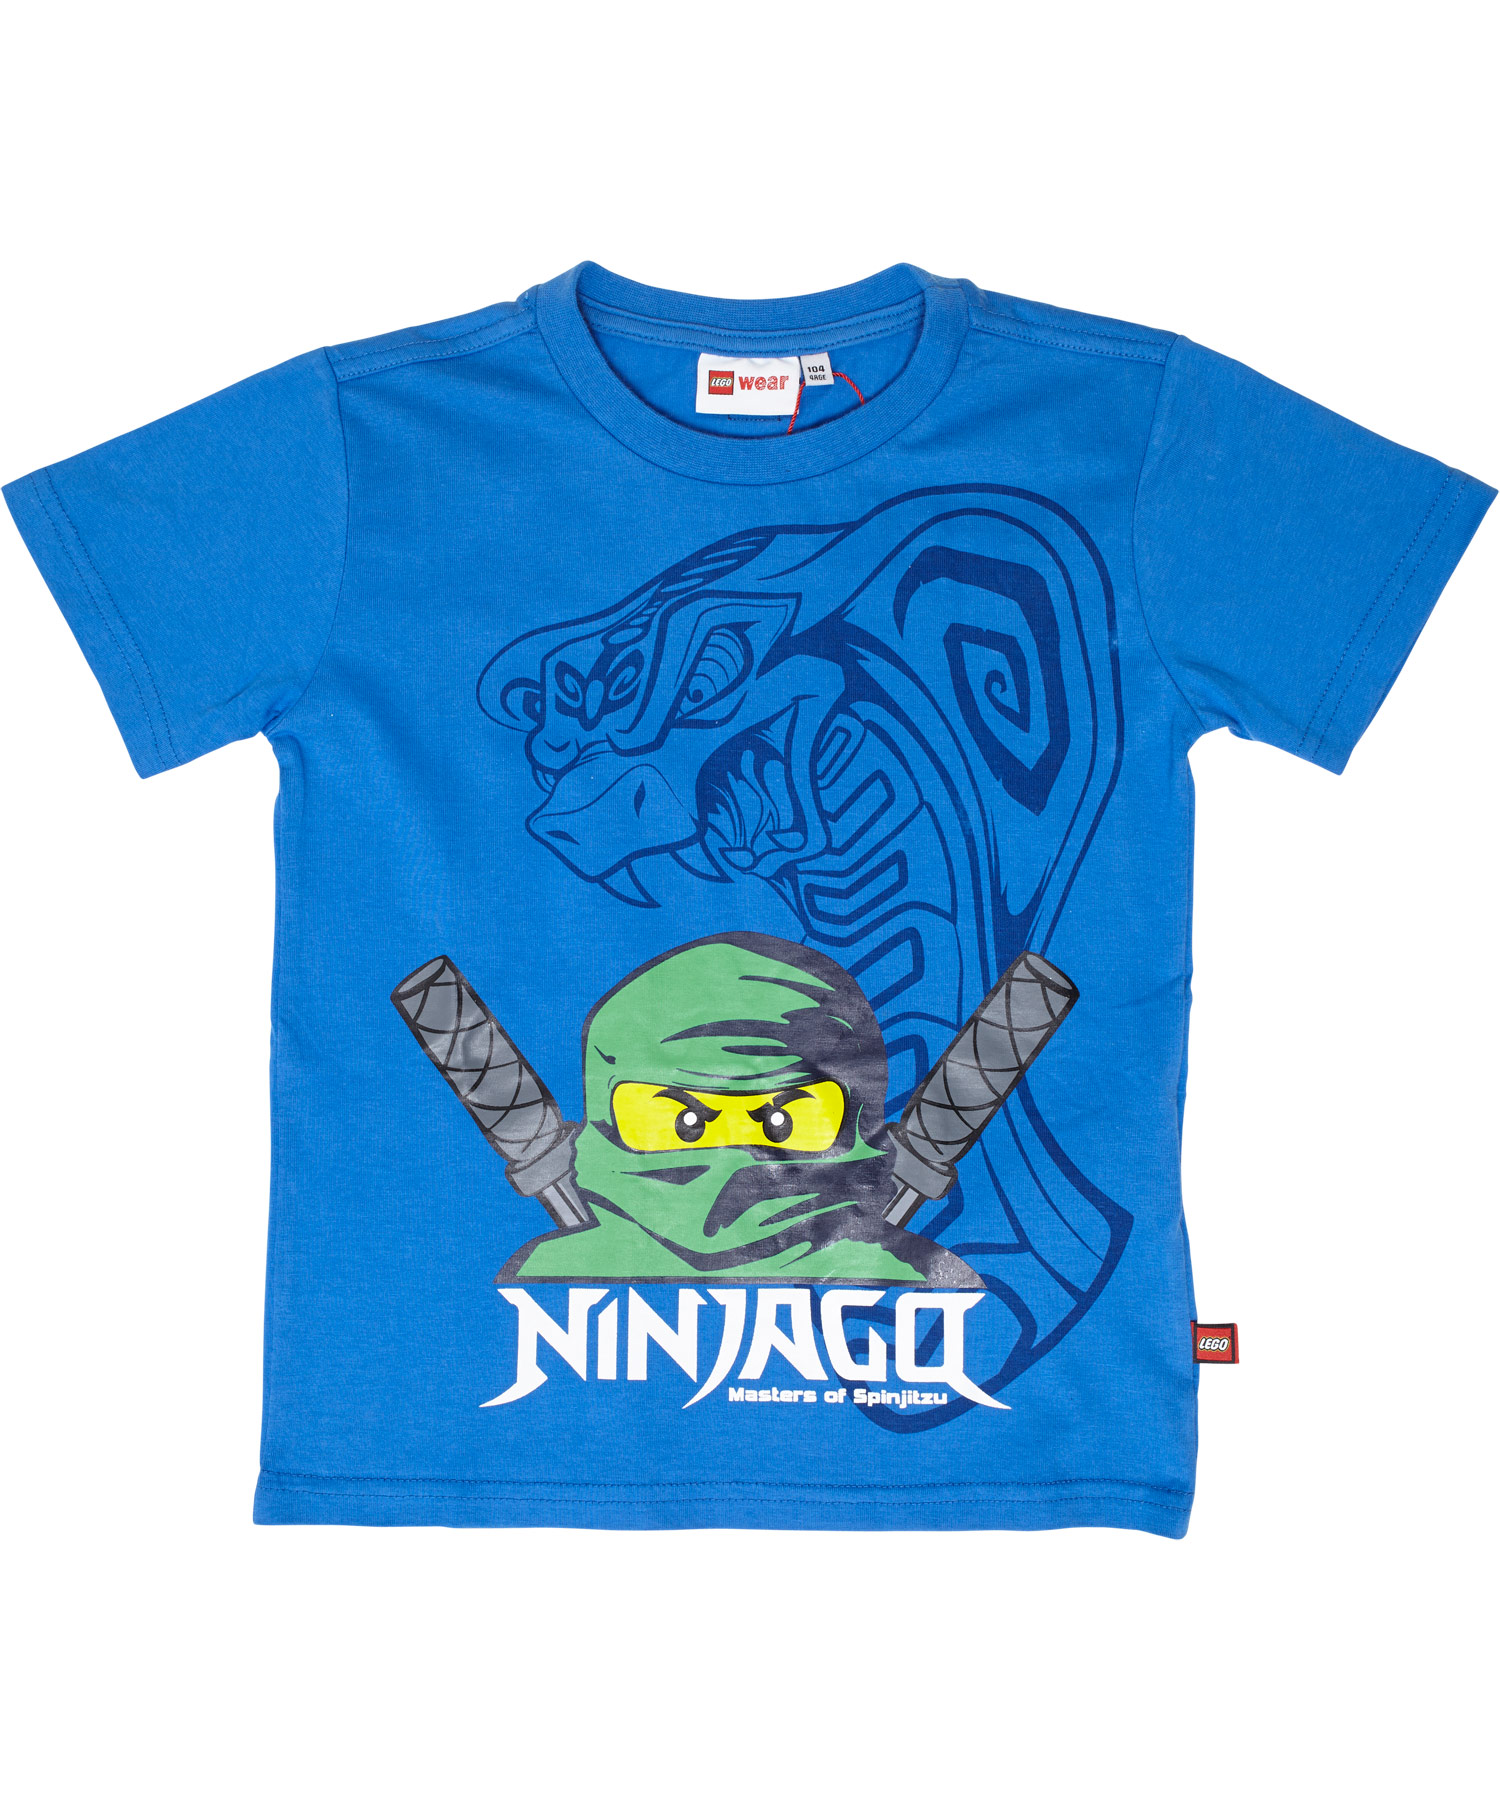 New! LEGO cool blue Ninjago t-shirt with green ninja